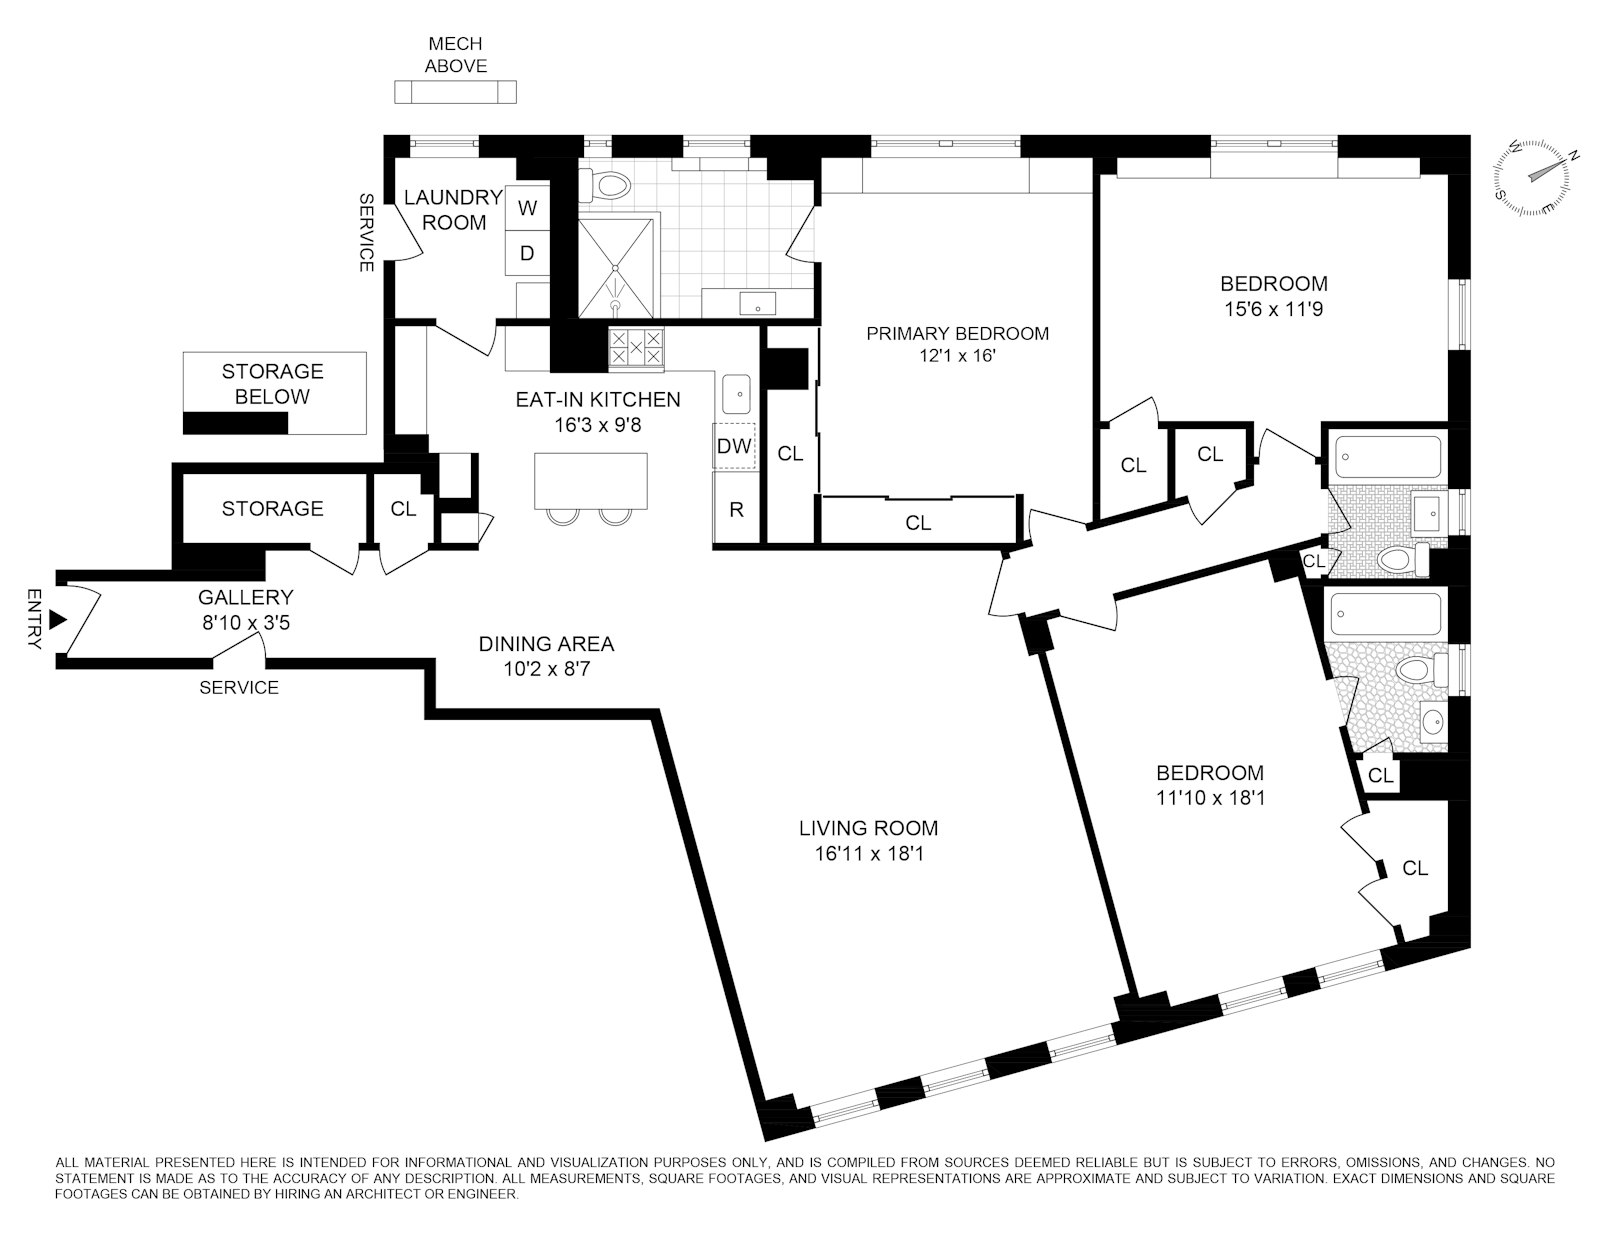 Floorplan for 245 West 104th Street, 6B